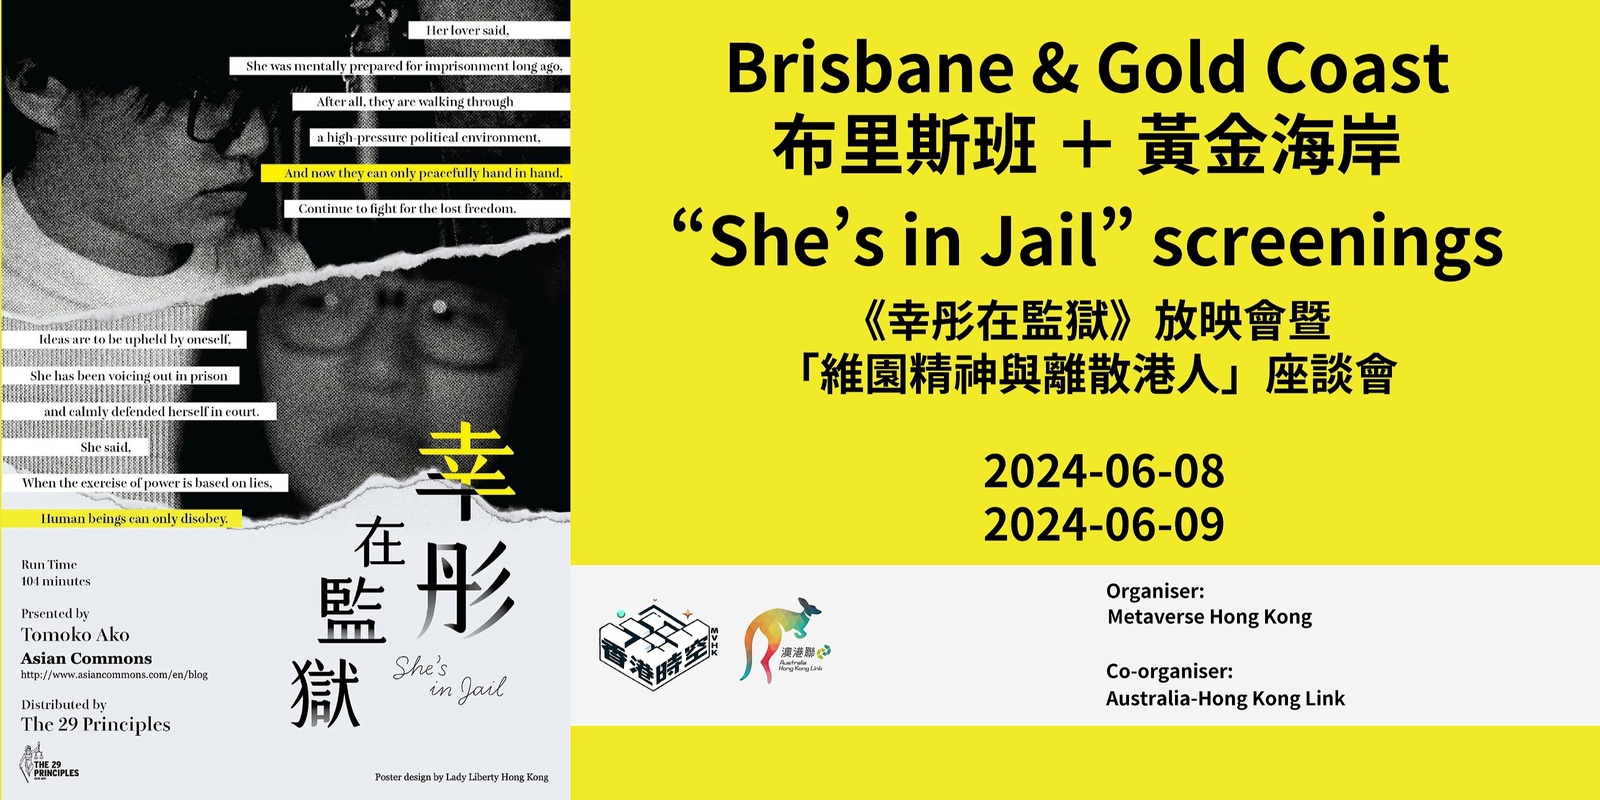 Banner image for 《幸彤在監獄》放映會暨「維園精神與離散港人」座談會 - 黃金海岸場. “She’s in Jail” documentary screening in the Gold Coast.